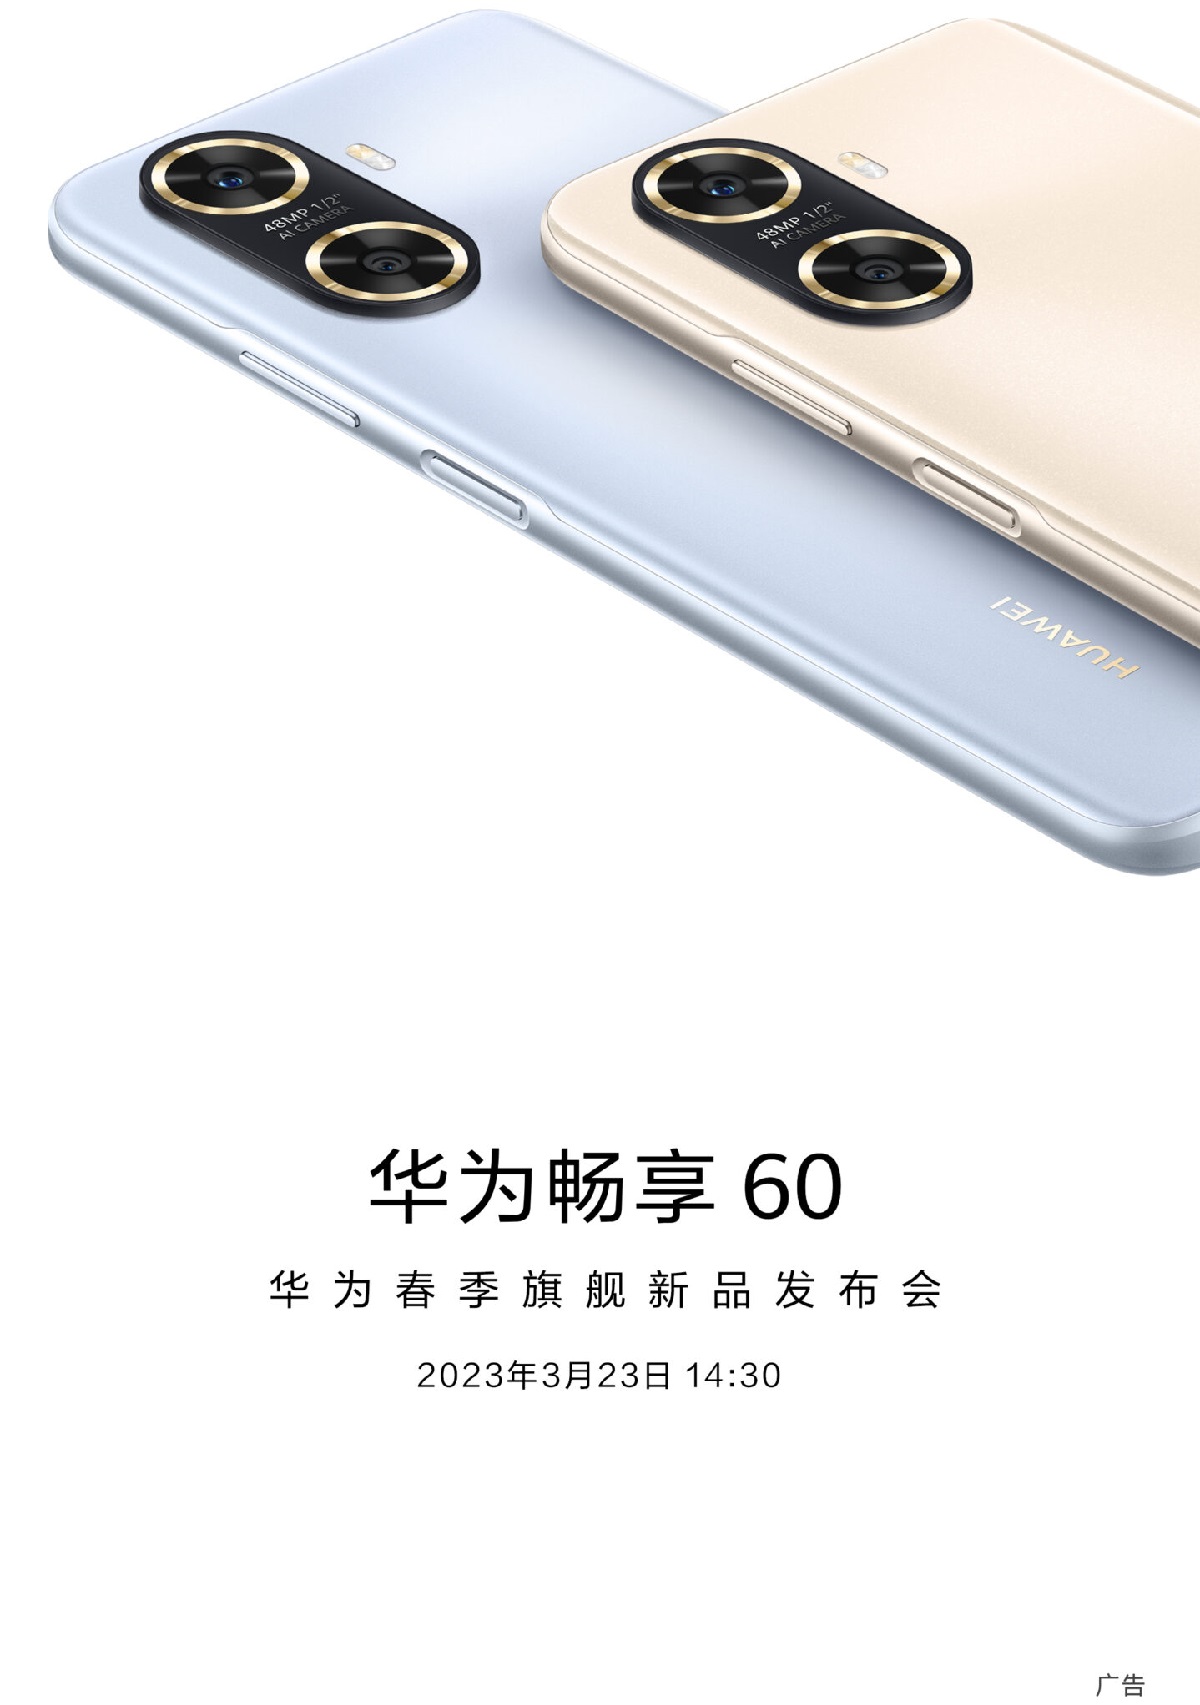 Huawei-Enjoy-60.jpg